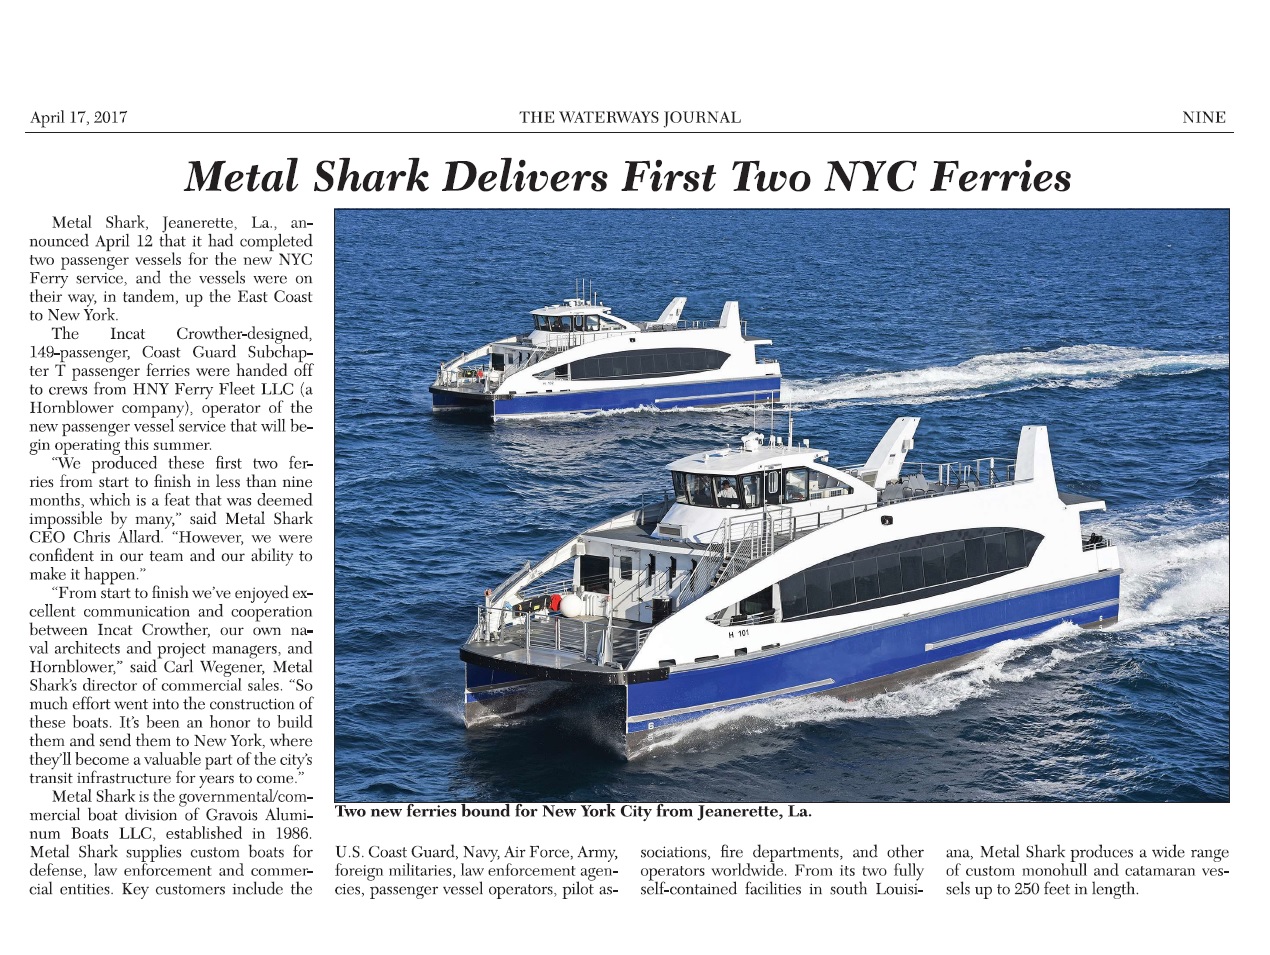 METAL SHARK FERRIES